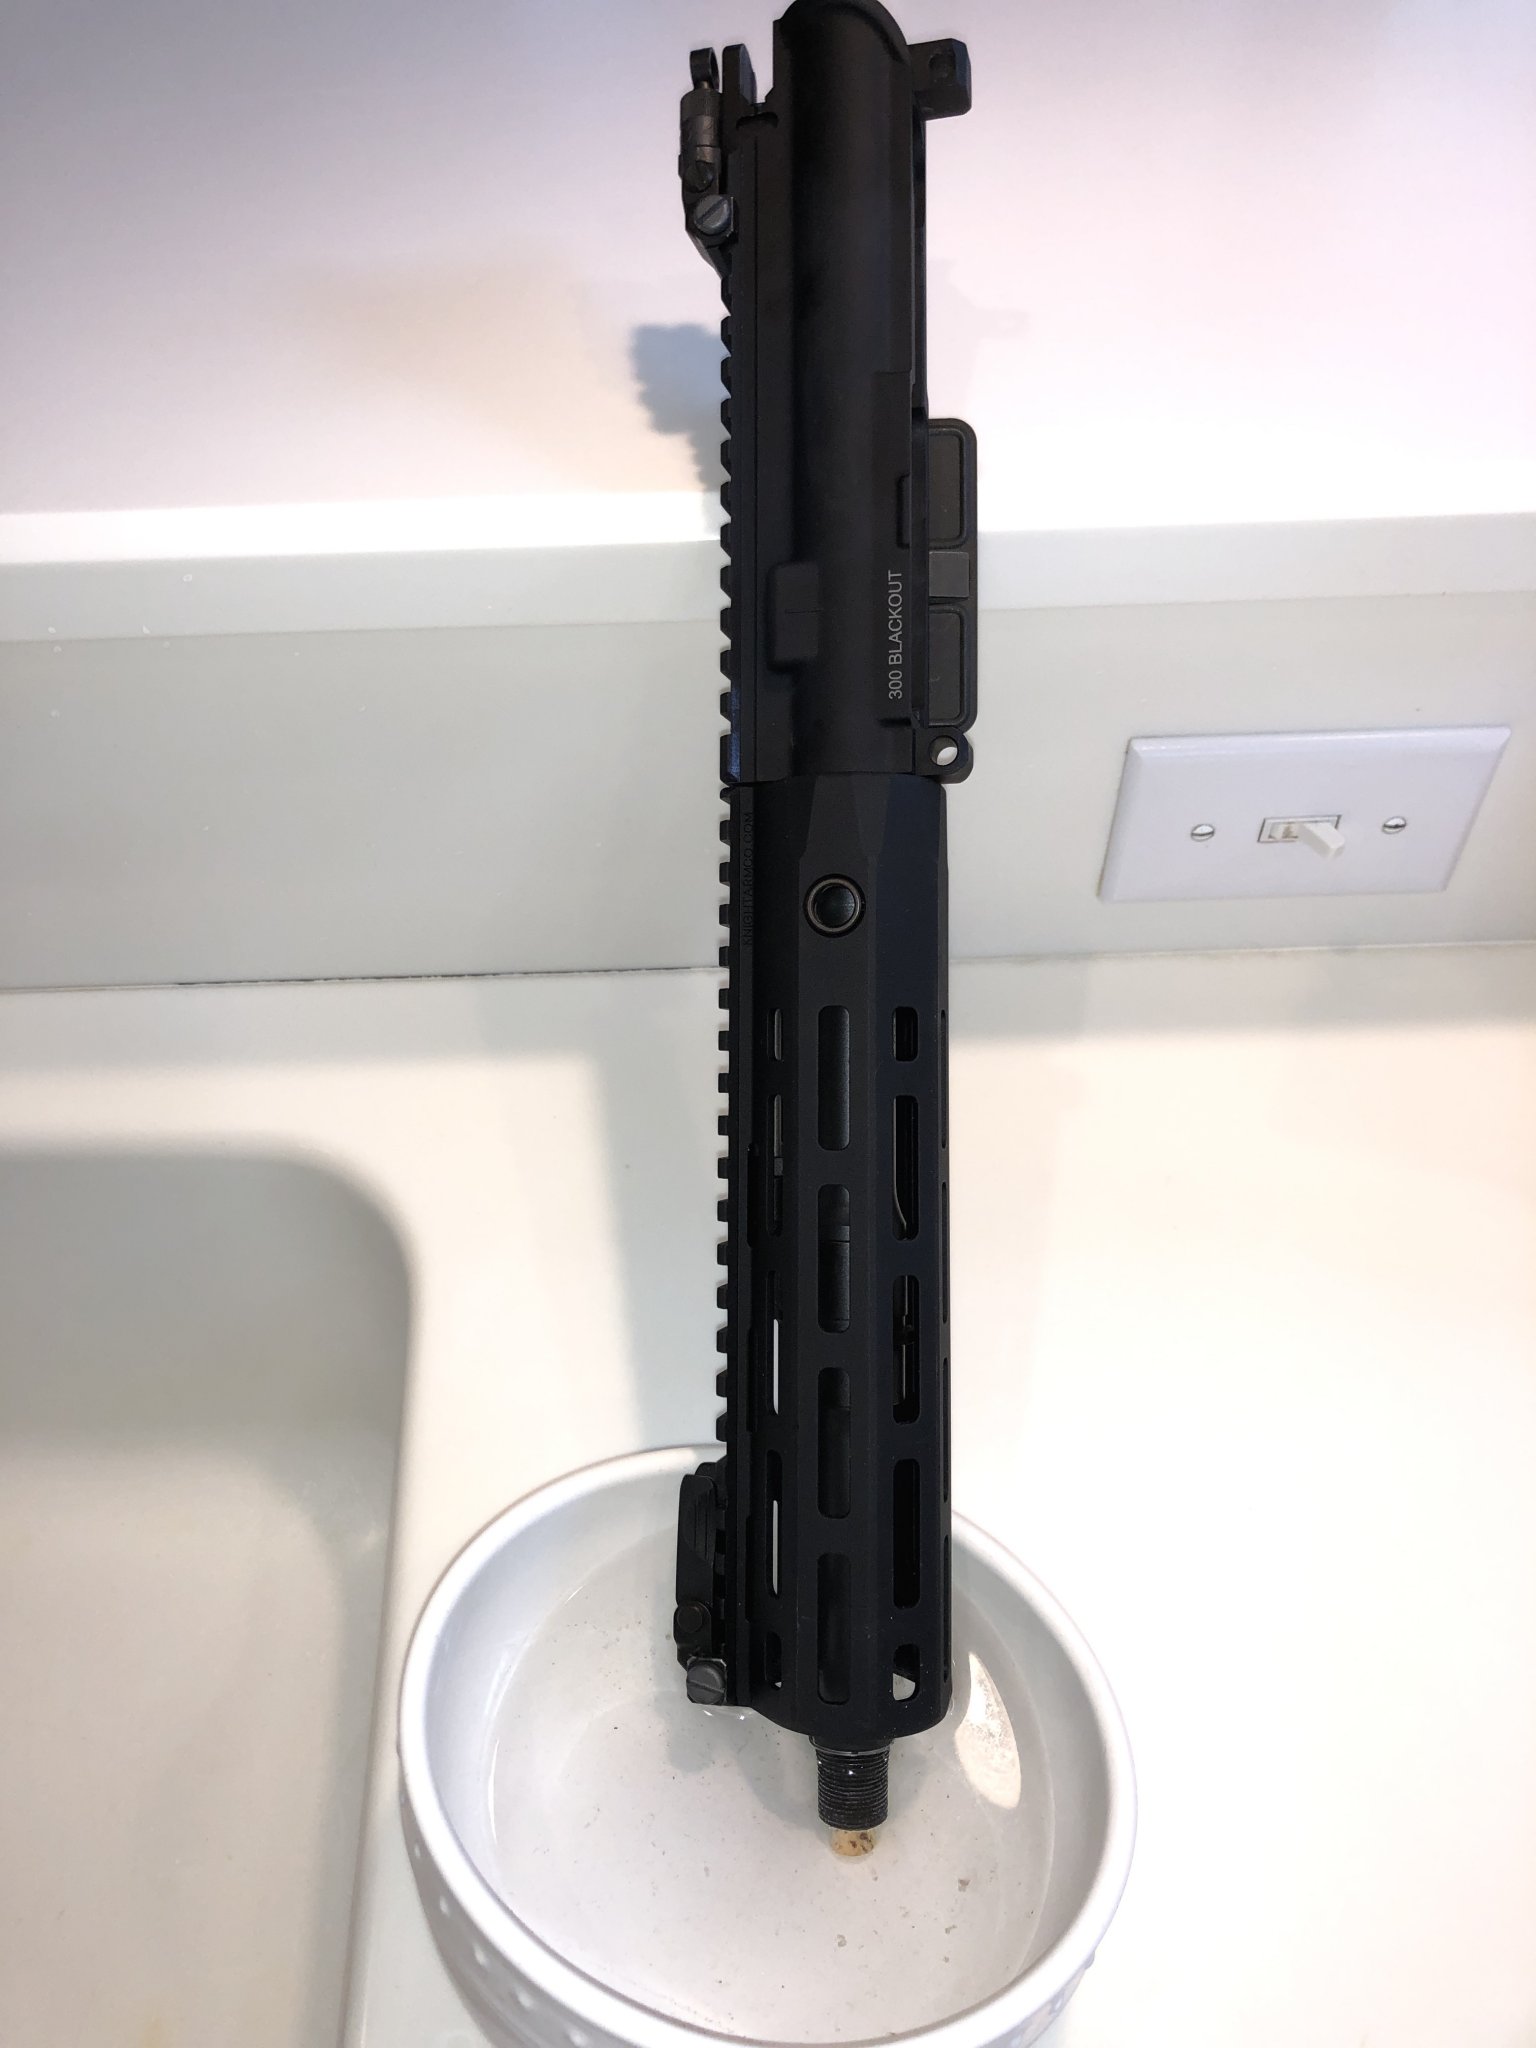 KAC 300 Blackout Removing Rocksett Muzzle Threads Hot WaterIMG_3788 copy.JPG